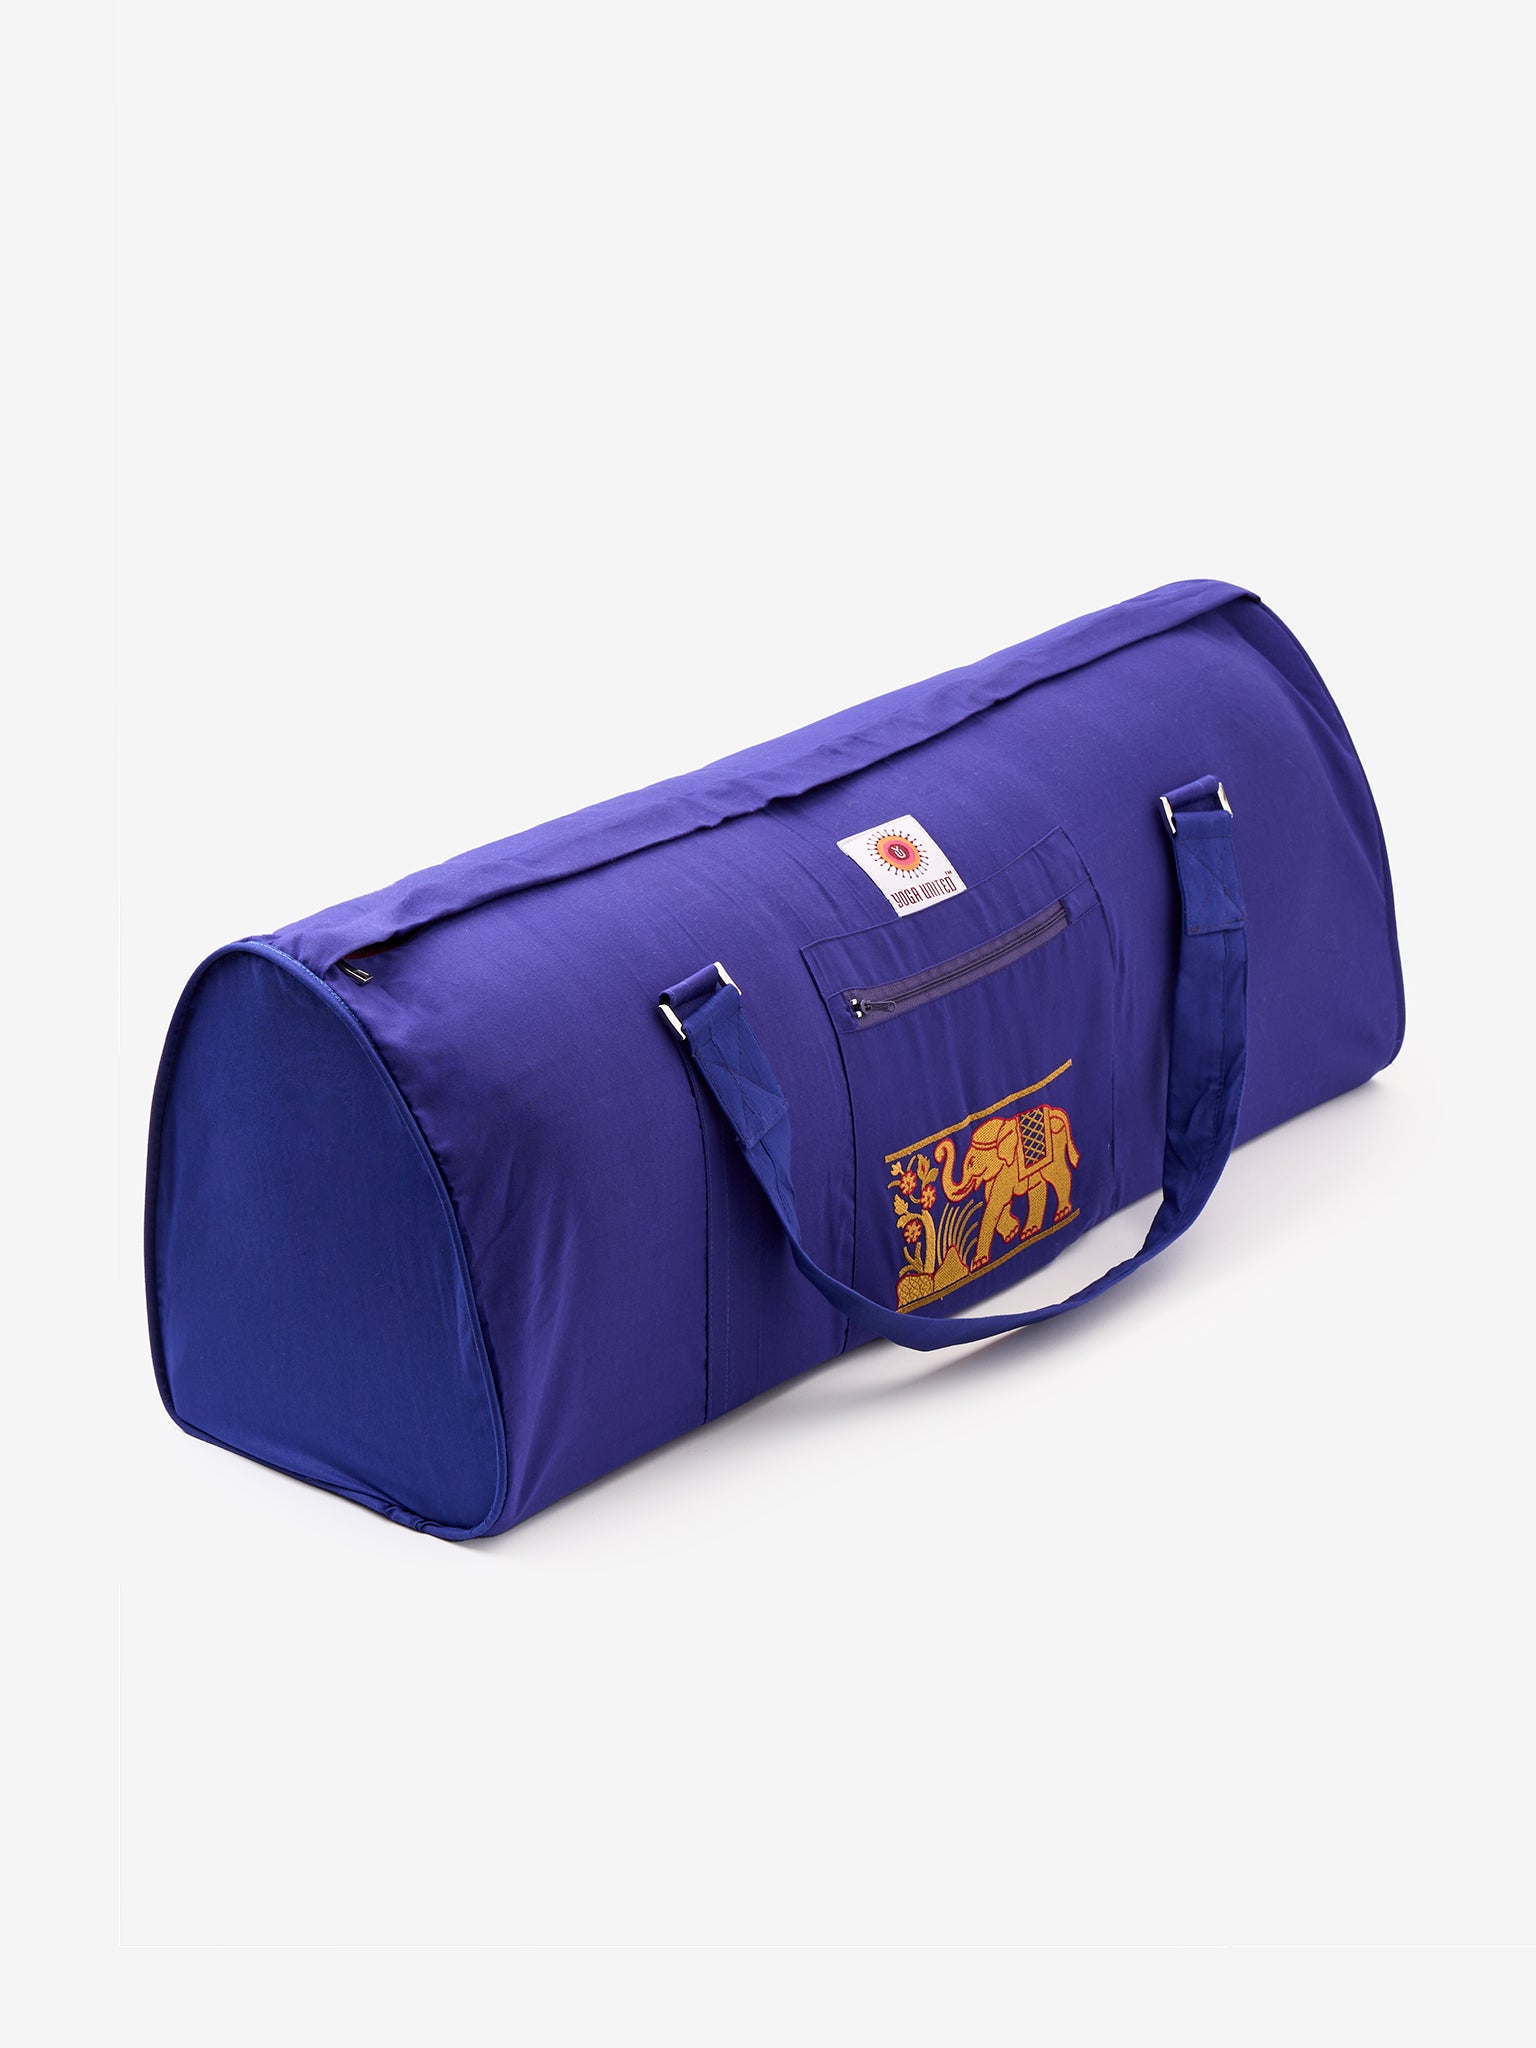 Yoga United Yoga Kit Bag